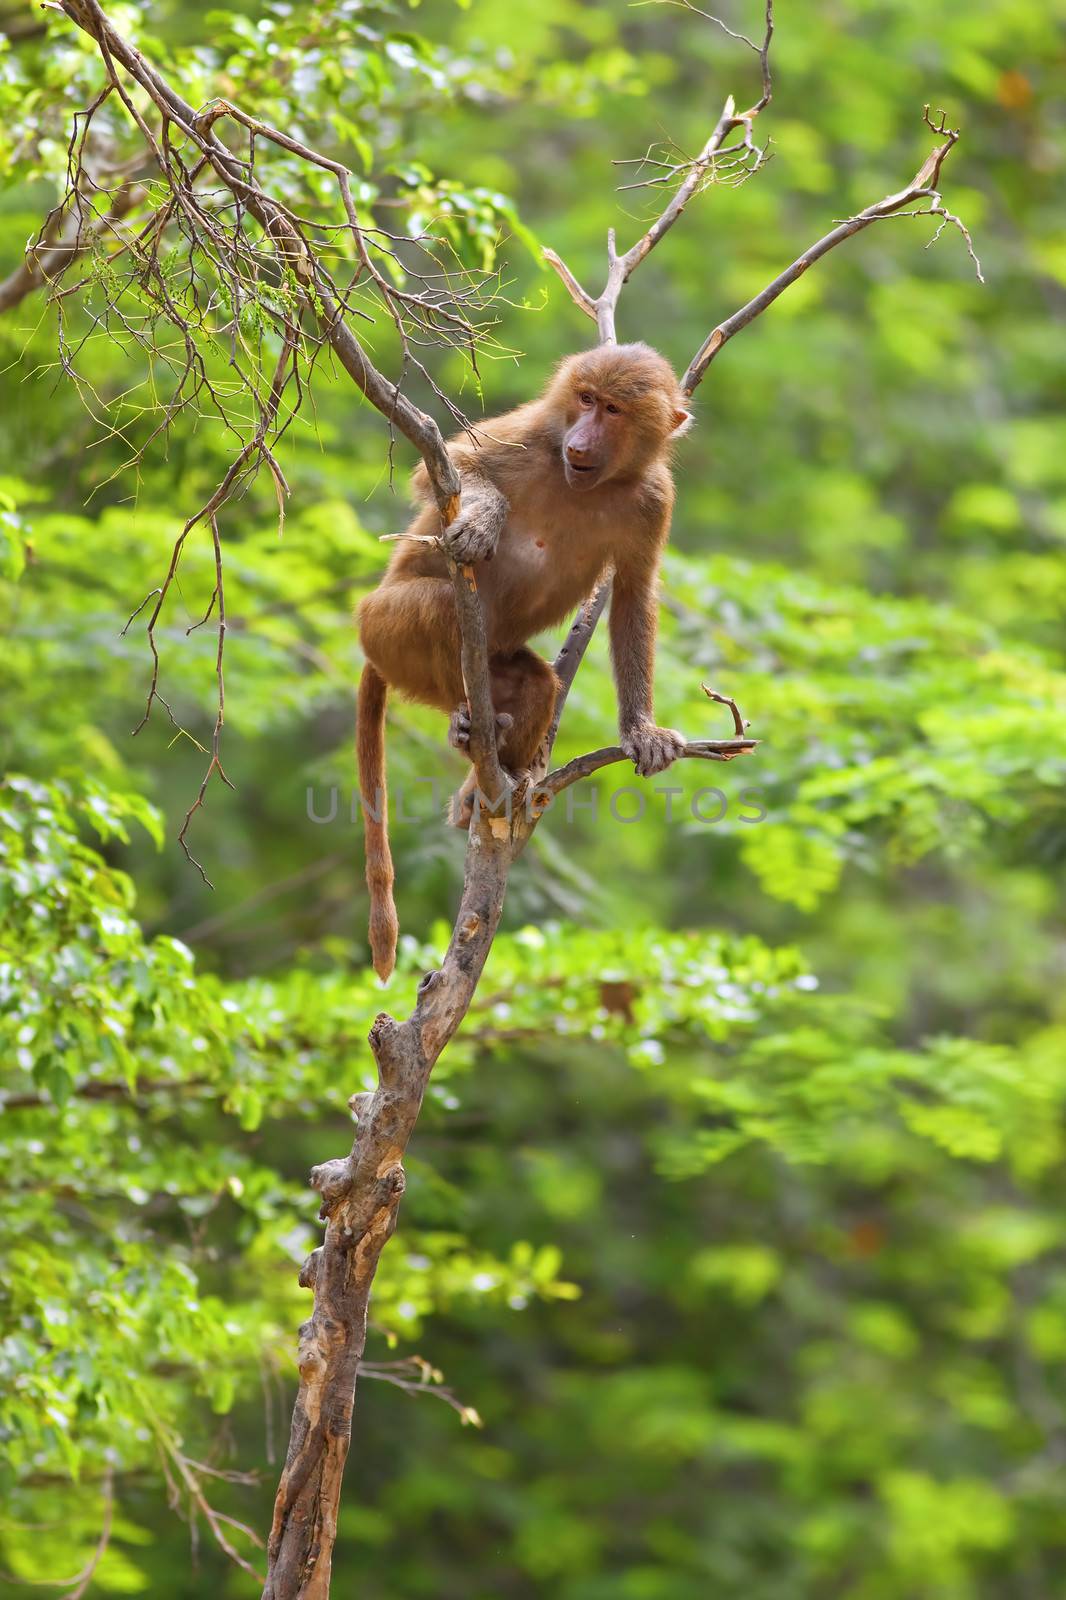 A juvenile Hamadryas baboon climbing in a tree